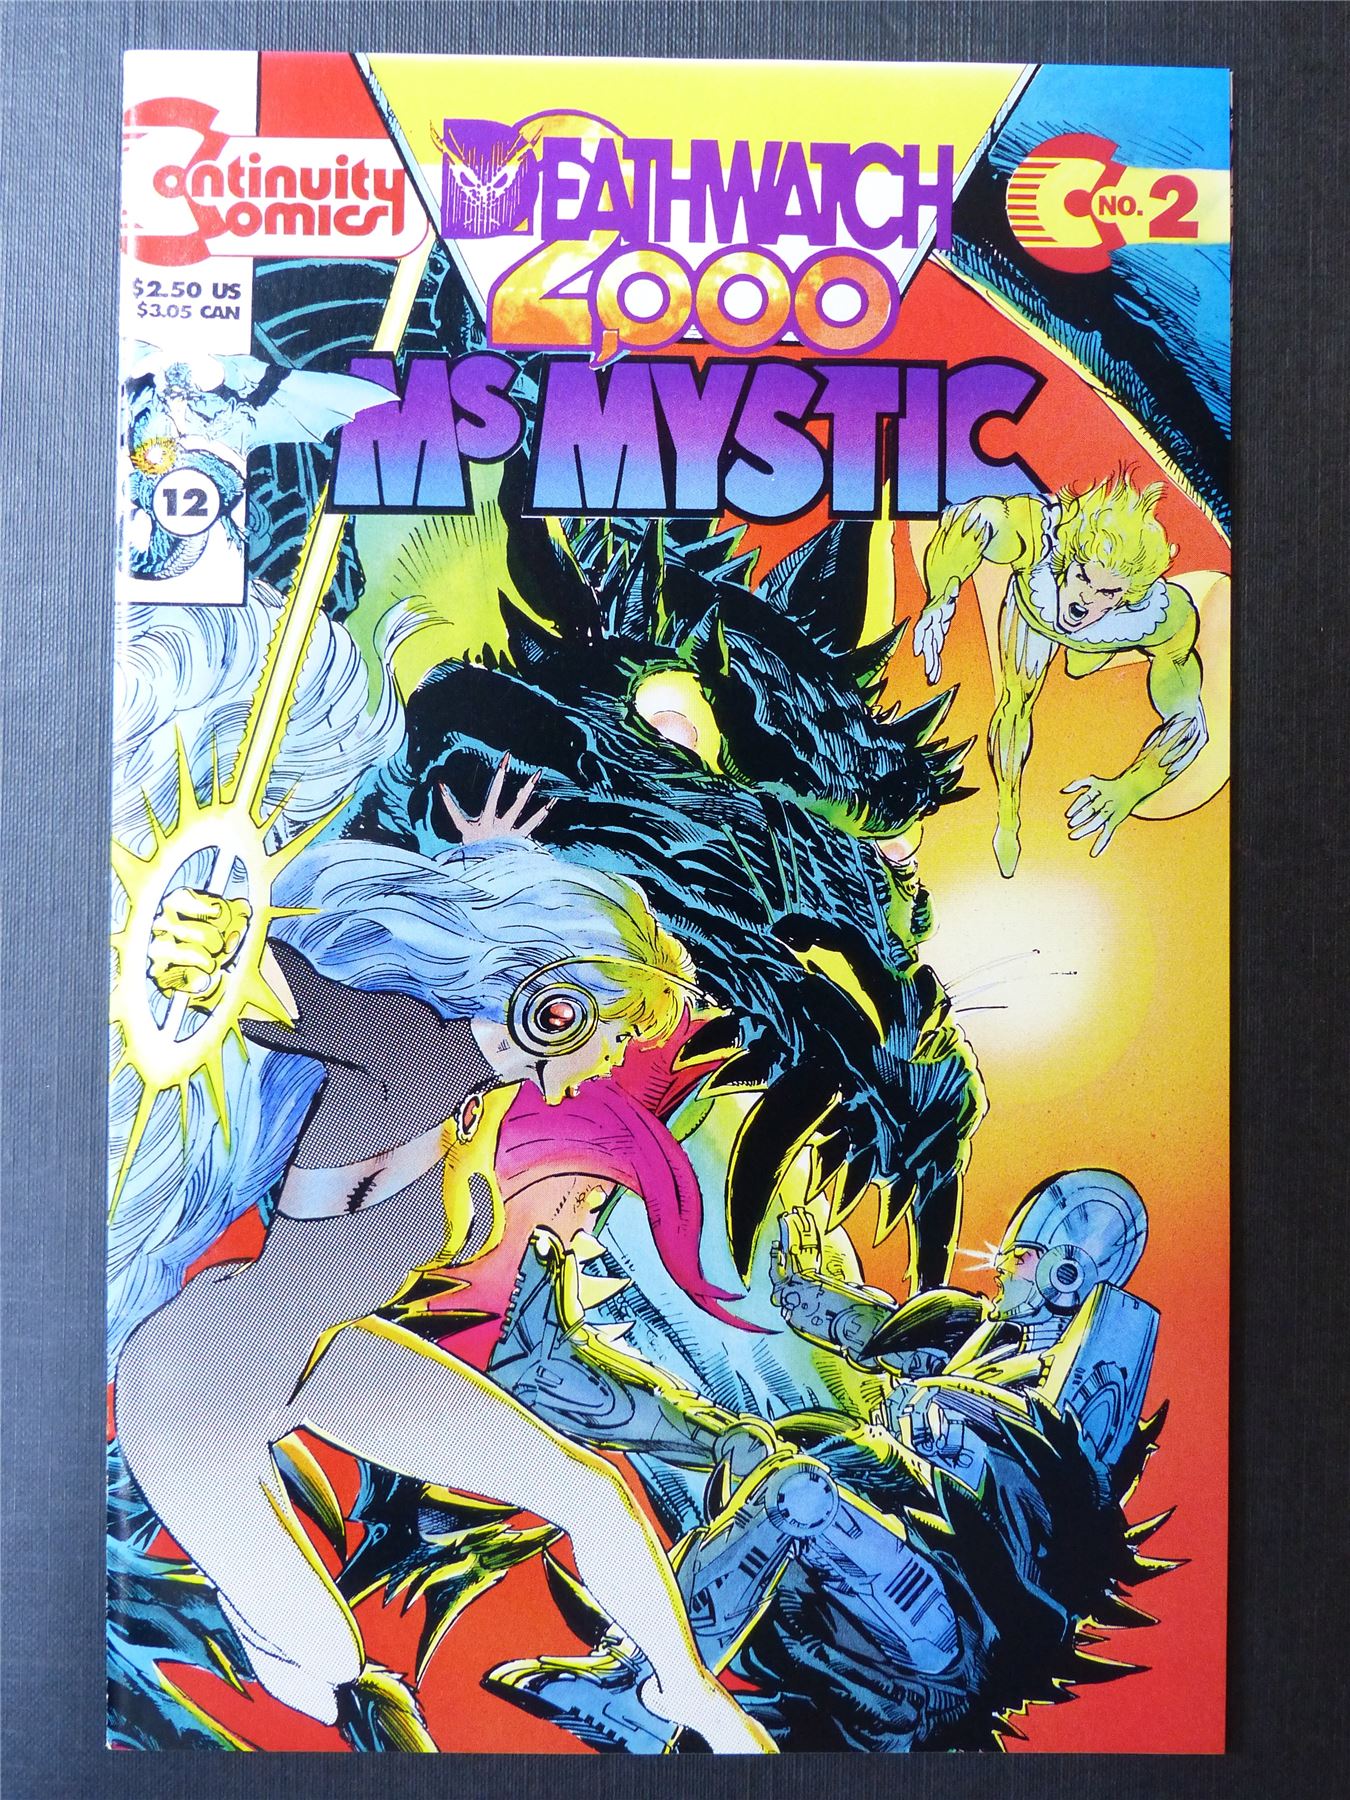 DEATHWATCH 2000: Ms Mystic #2 - Continuity Comics #2TQ